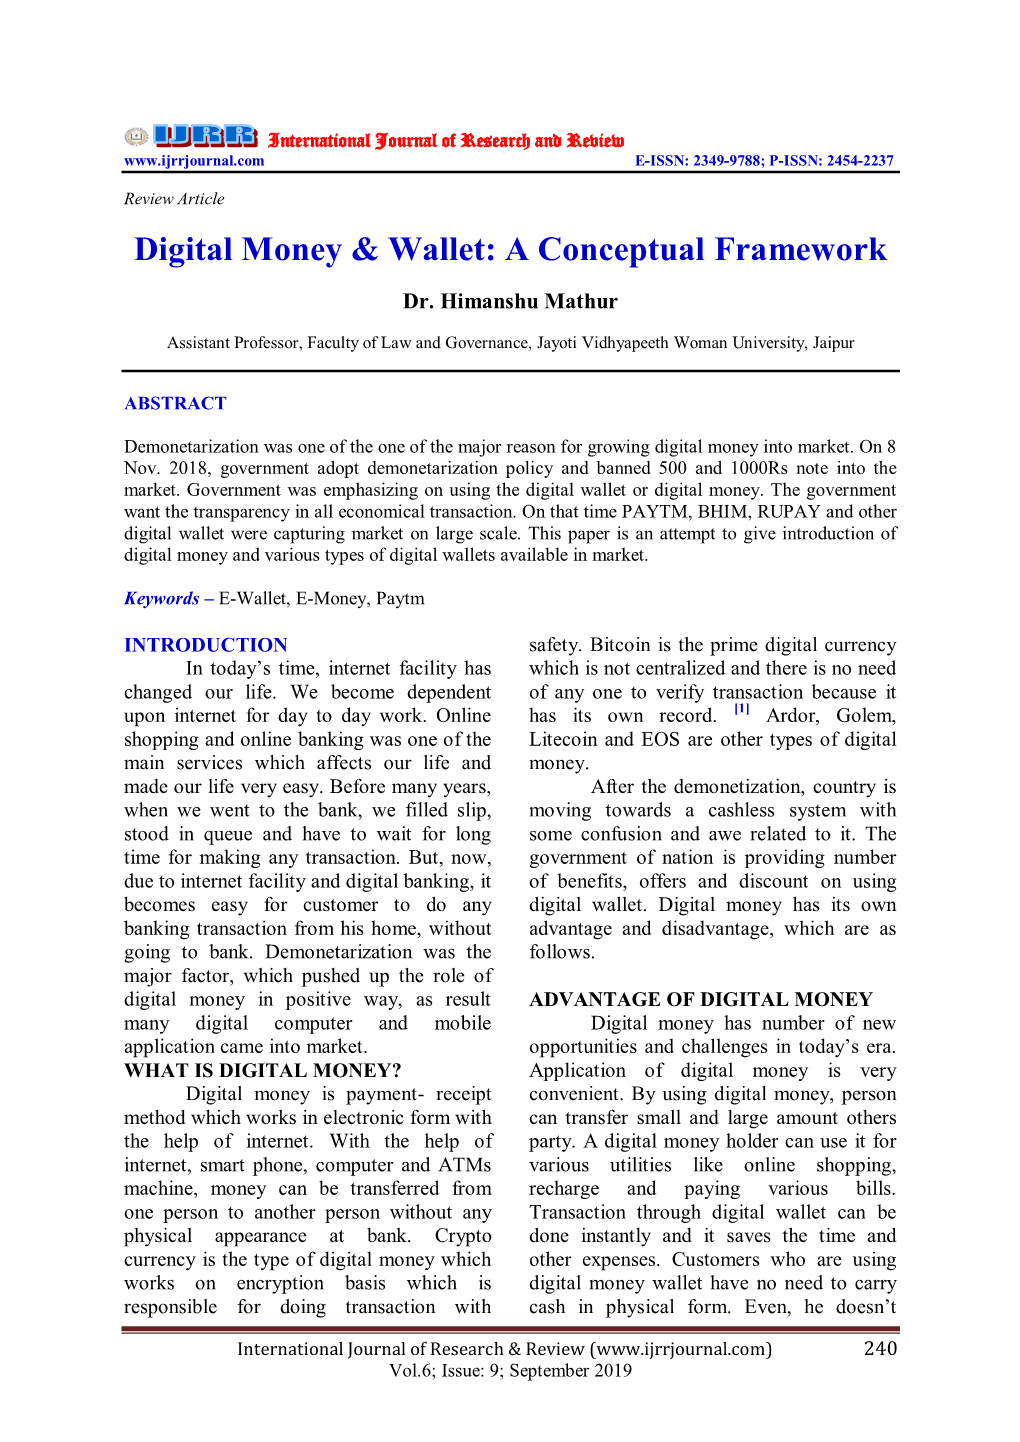 Digital Money & Wallet: a Conceptual Framework